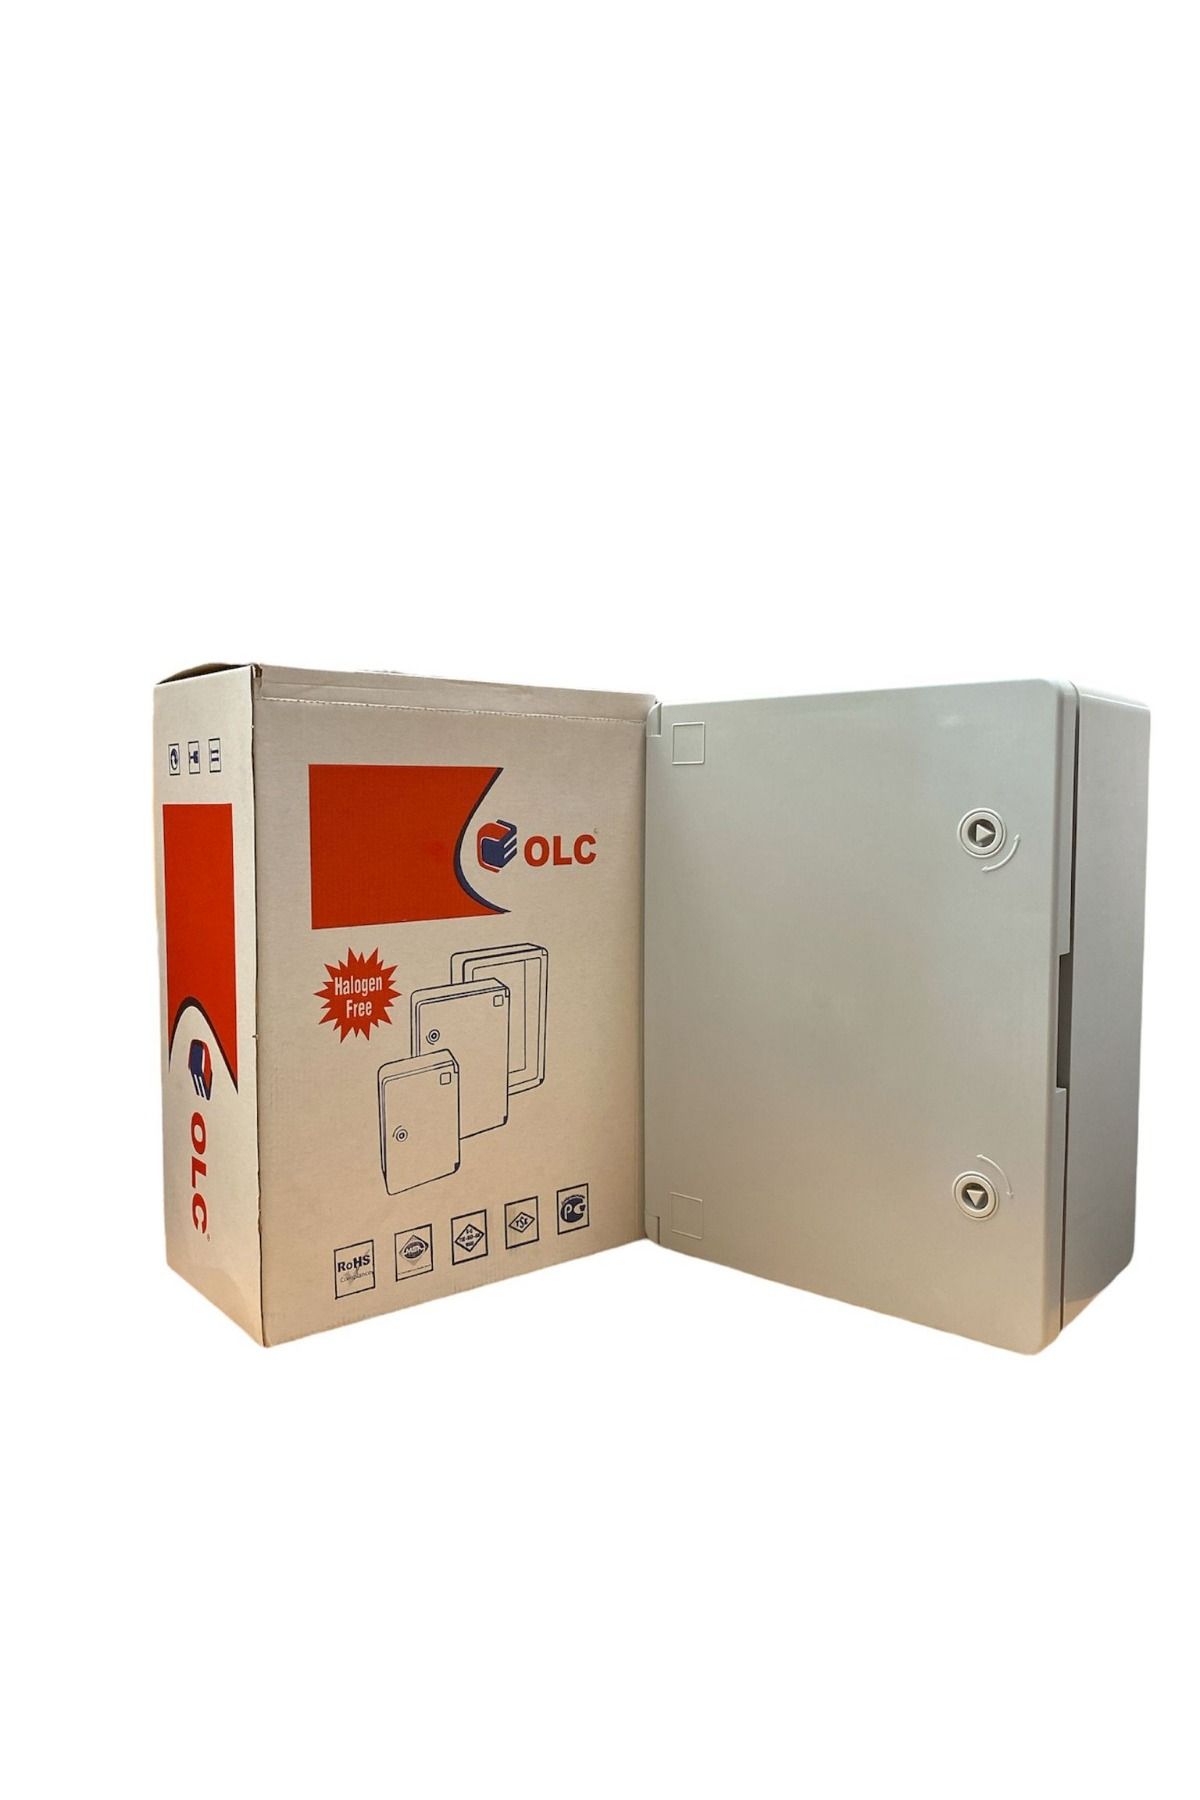 OLC Plastik Elektrik Panosu Opak 500x400x180mm Ip65 Halogen Free(ALEV ALMAZ)